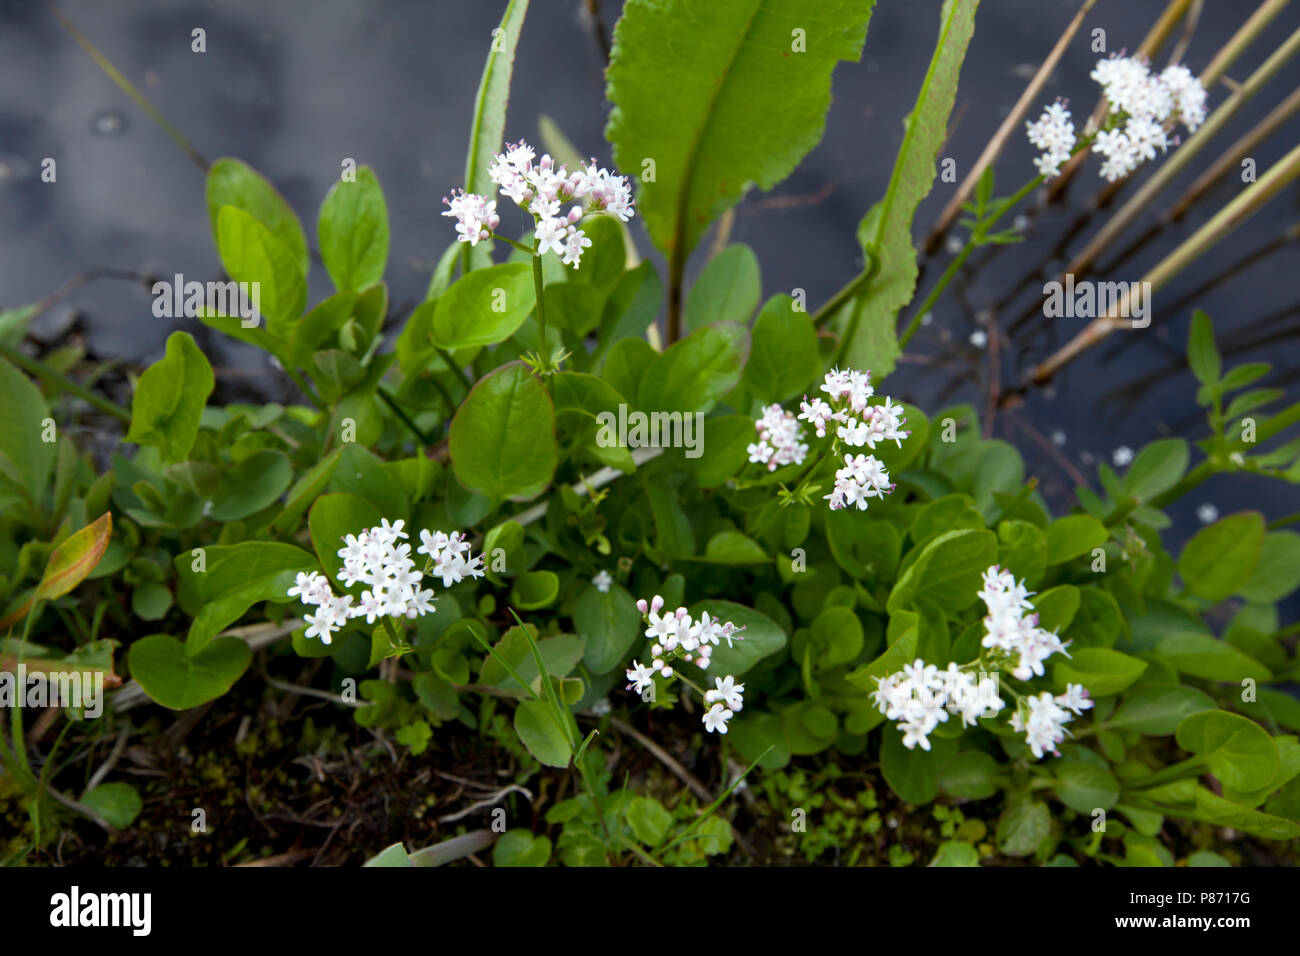 Bloeiende Kleine valeriaan Nederland, Flowering Marsh Valerian Netherlands Stock Photo